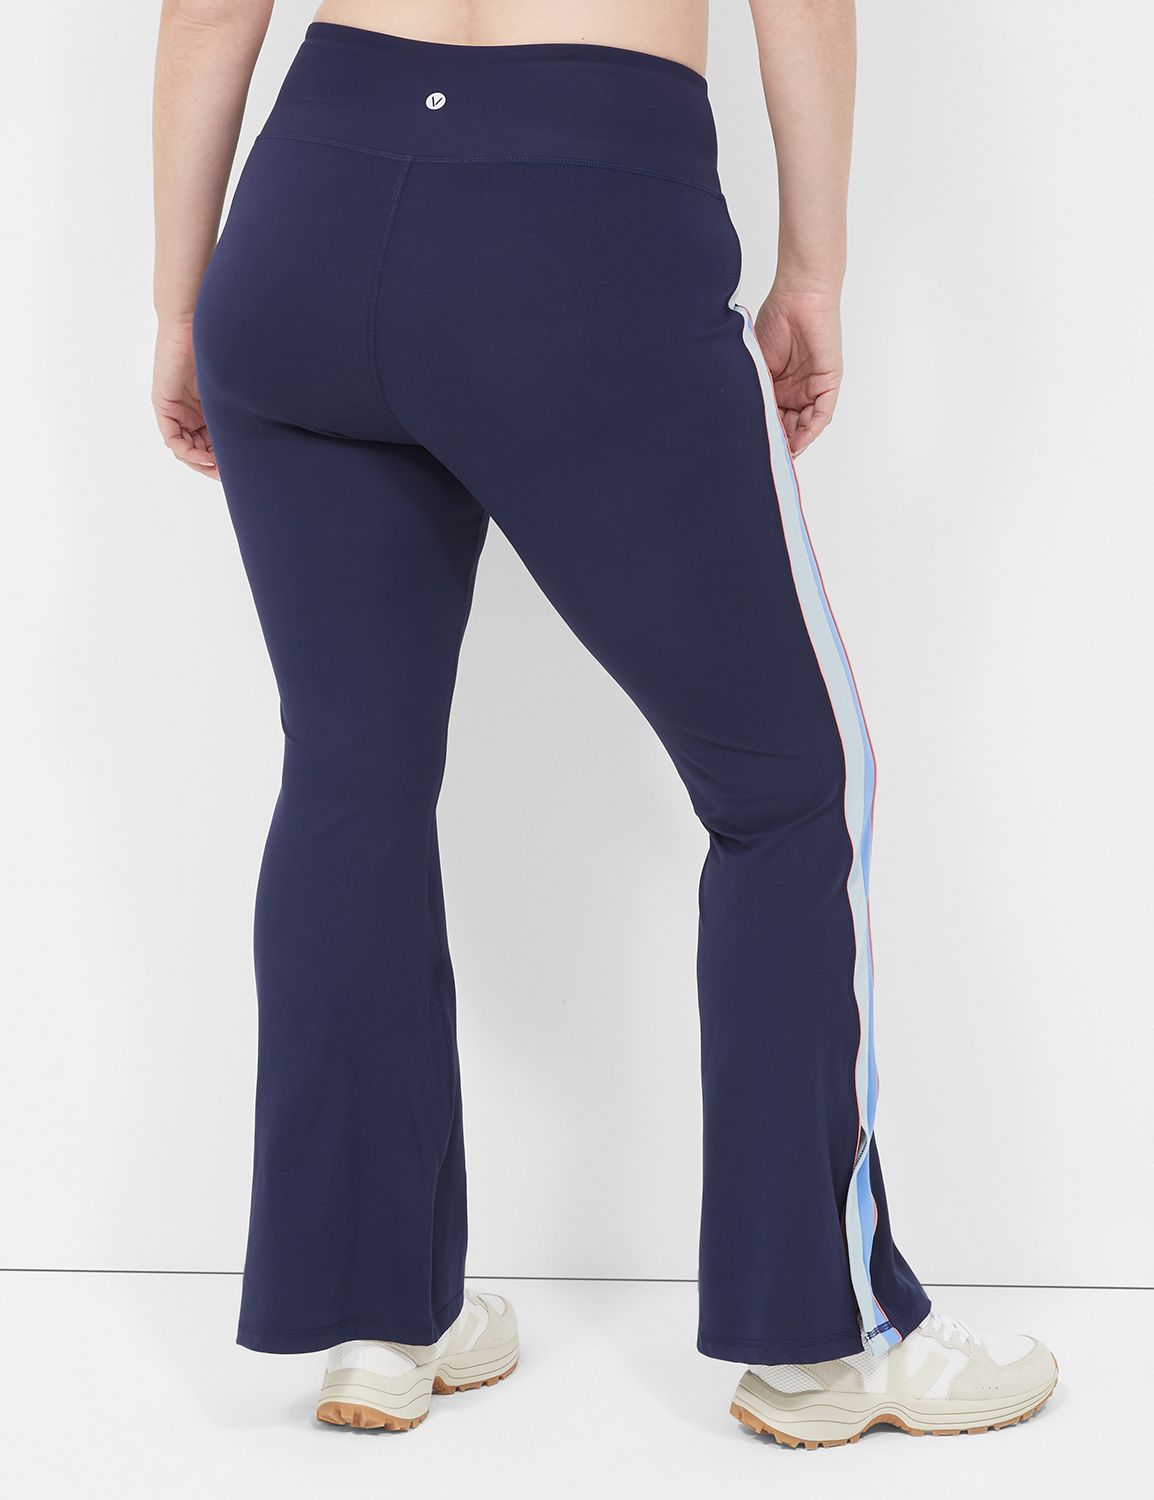 NWT Lane Bryant LIVI Soft High Rise Blue Yoga Pants With Pockets 34/36 NEW  (378)